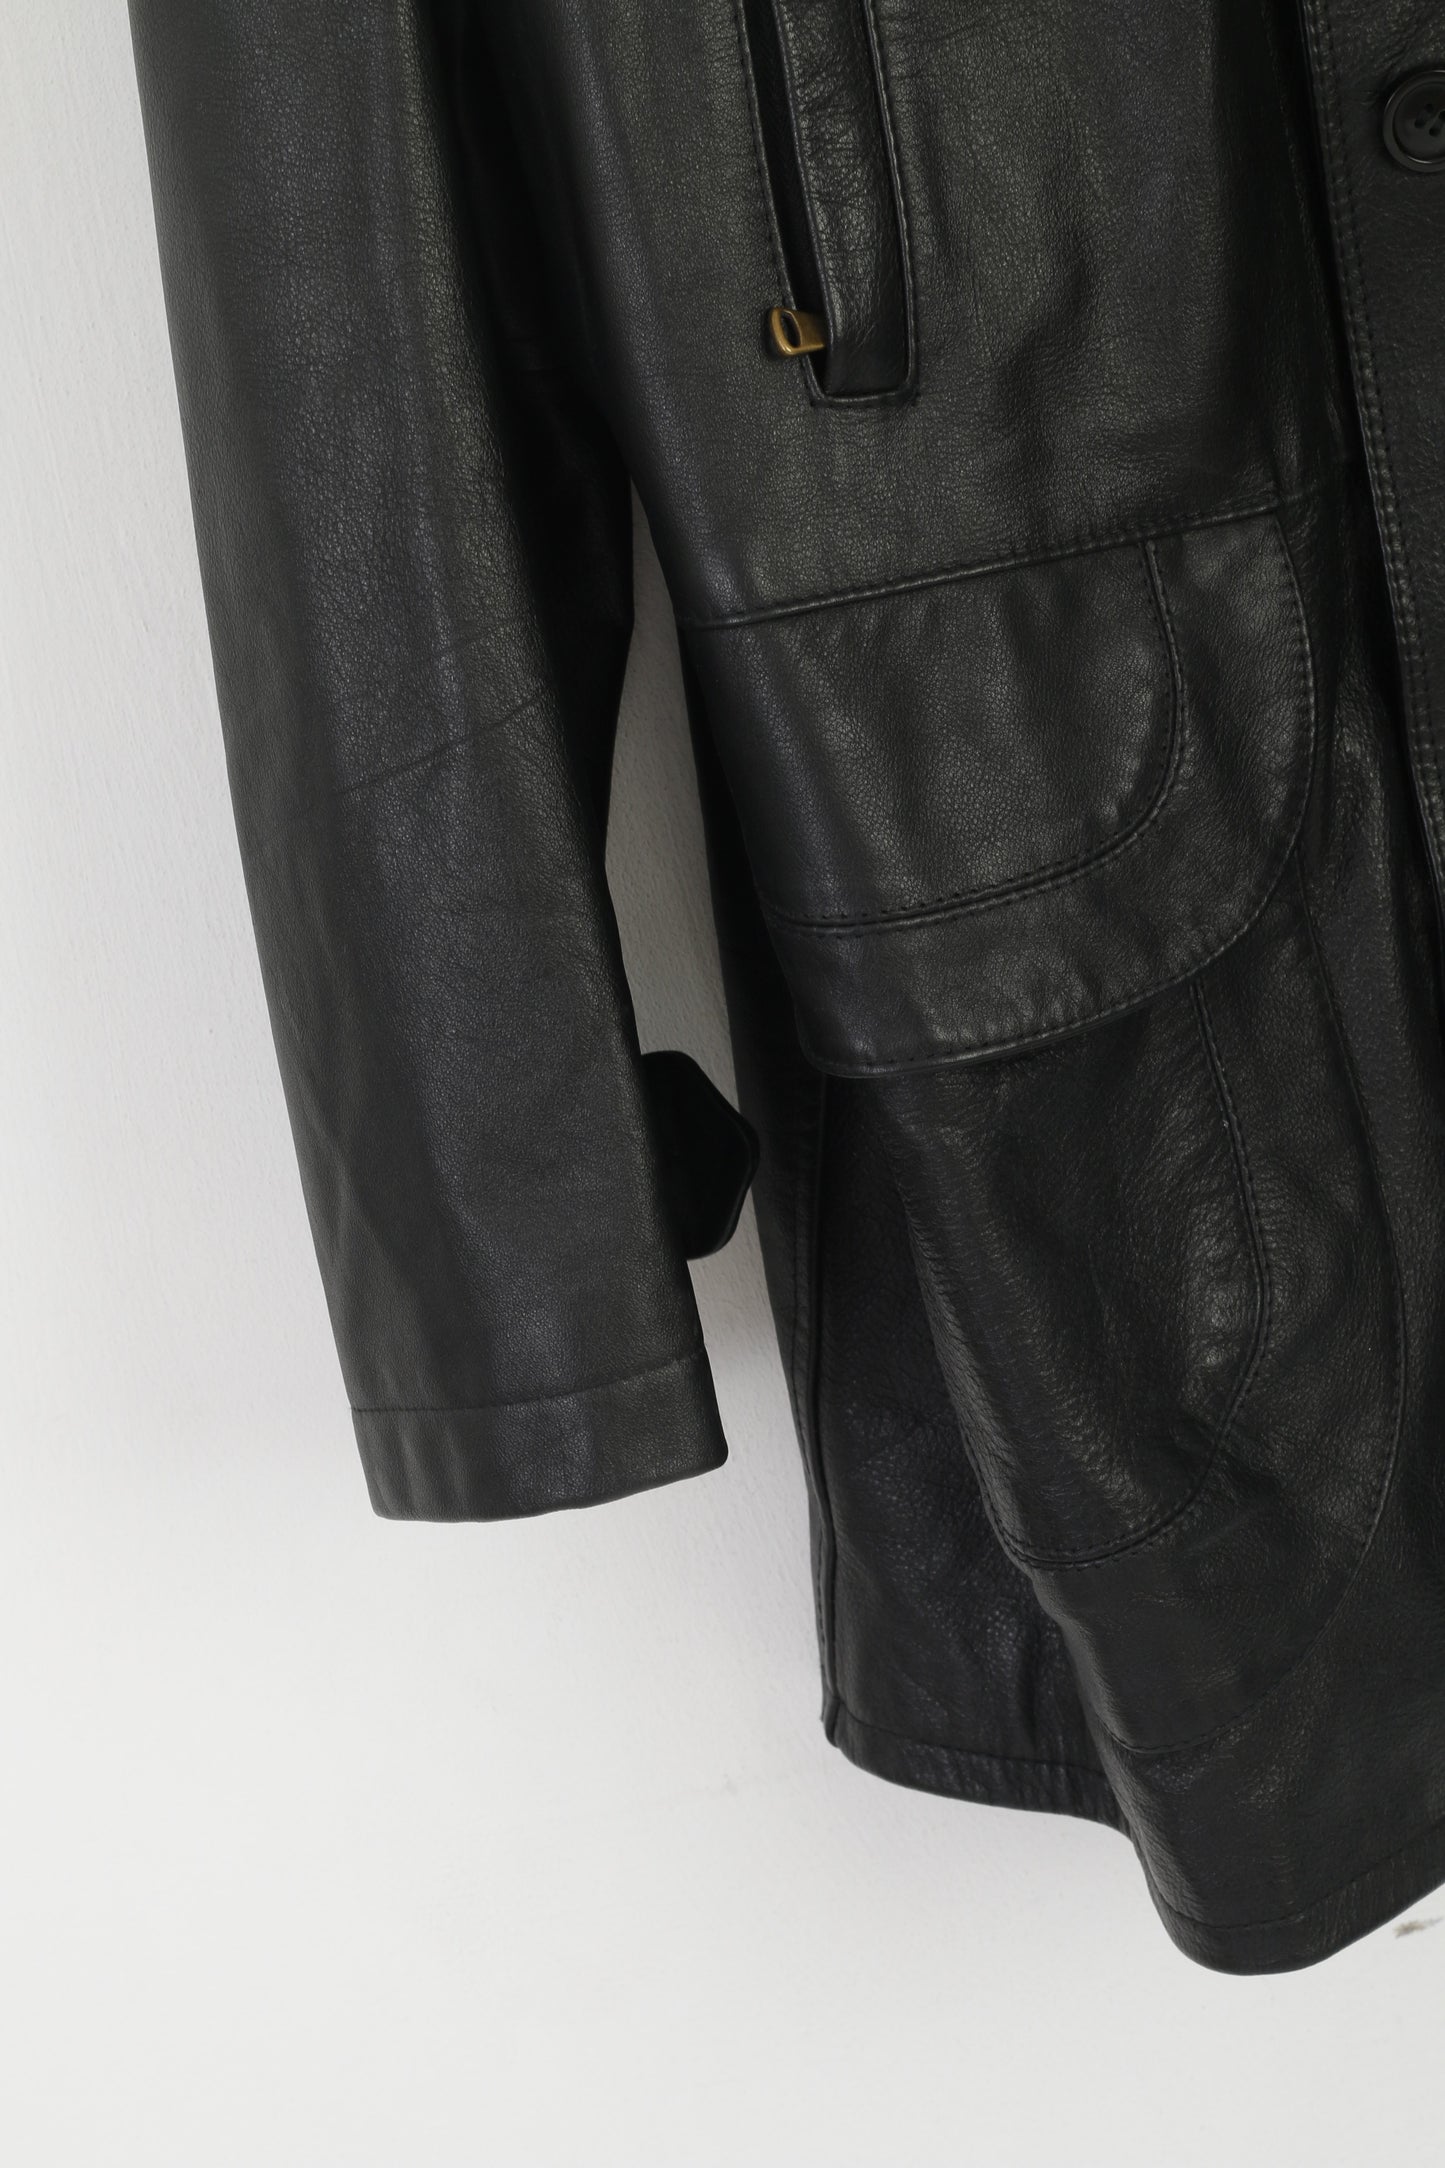 Cocci Vera Pele Men 50 M Jacket Black Leather Vintage Made in Italy Zip Up Parka